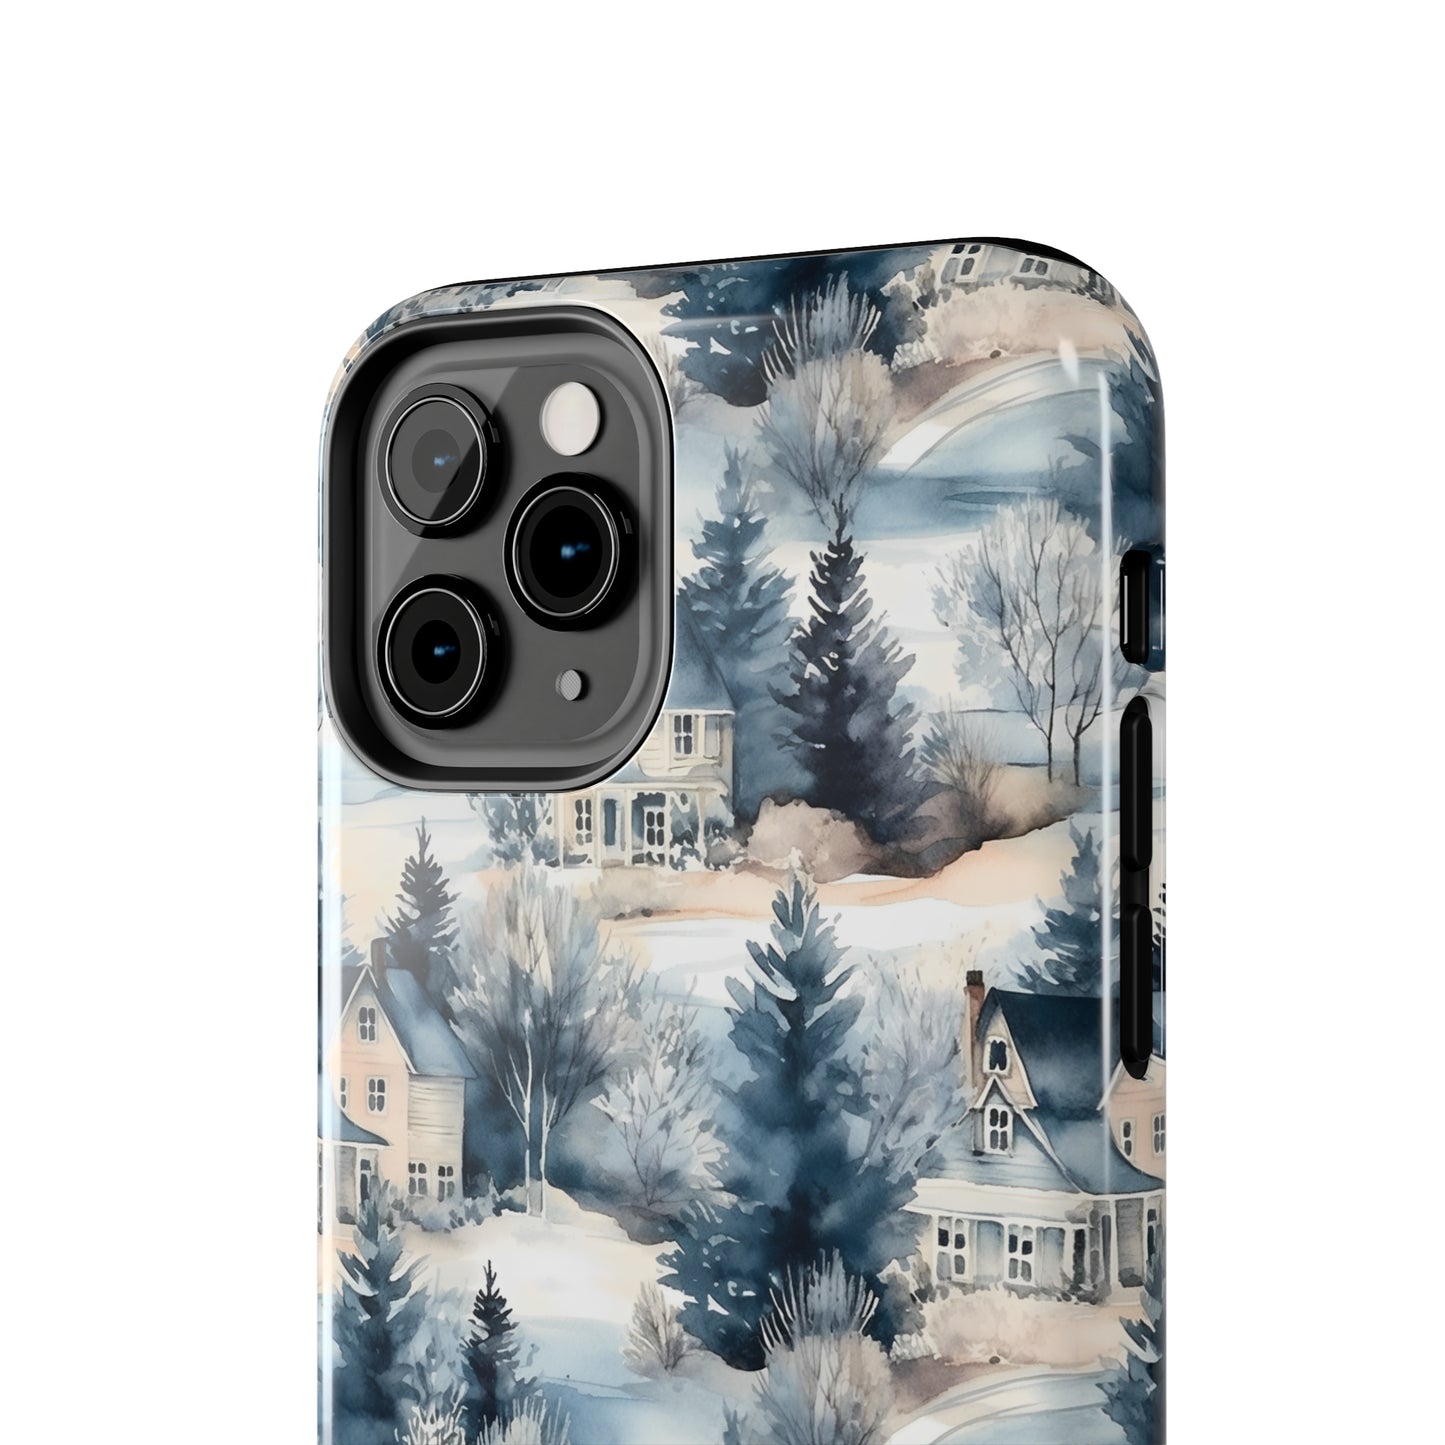 Snowy Village iPhone Tough Phone Cases